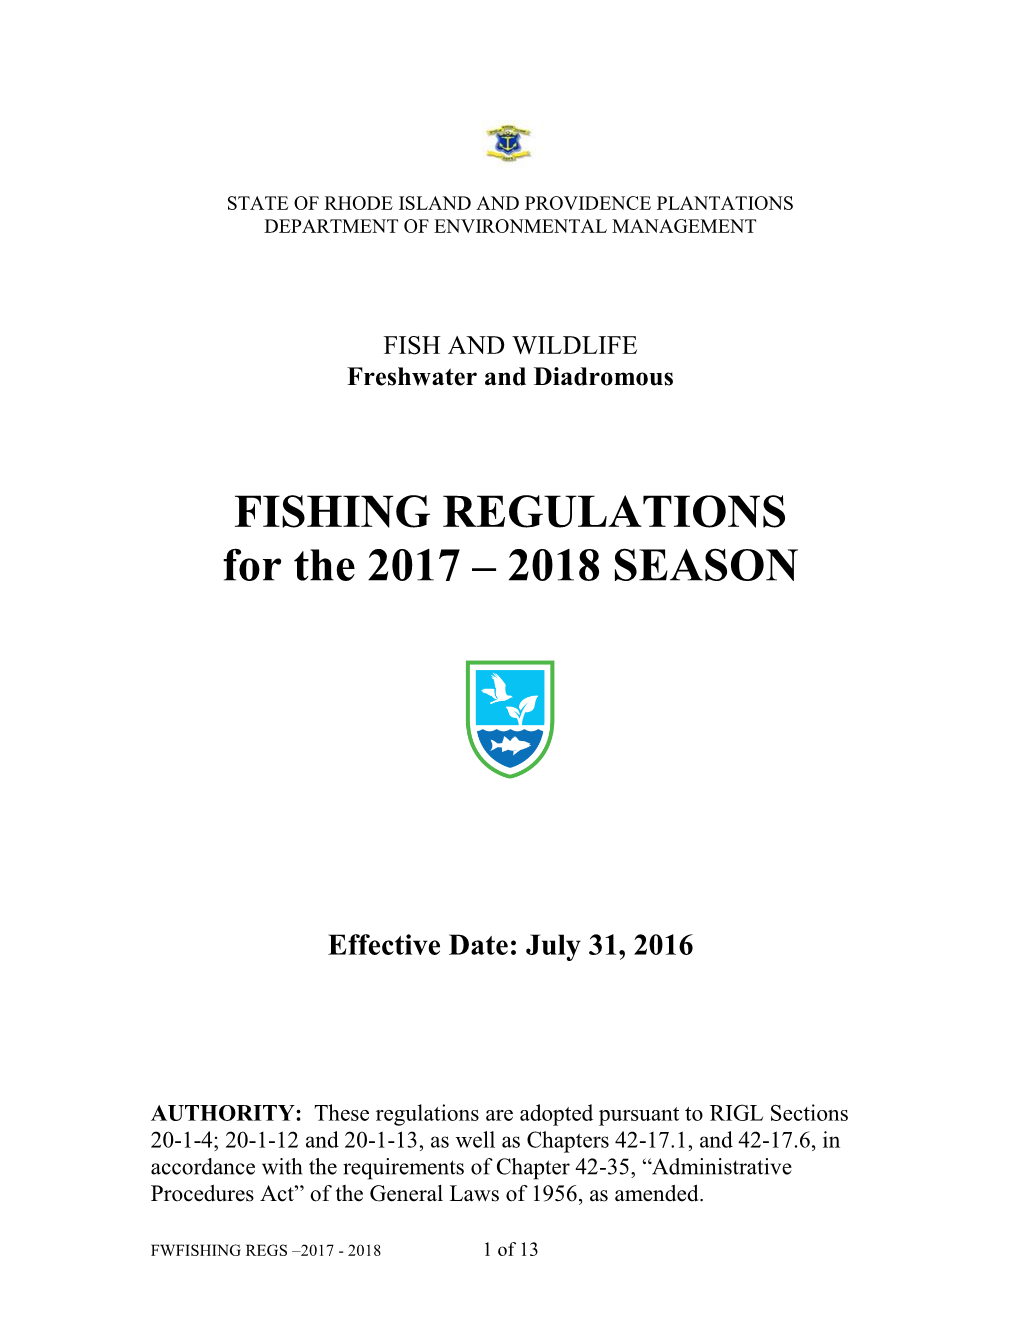 Freshwater Fishing Regulations